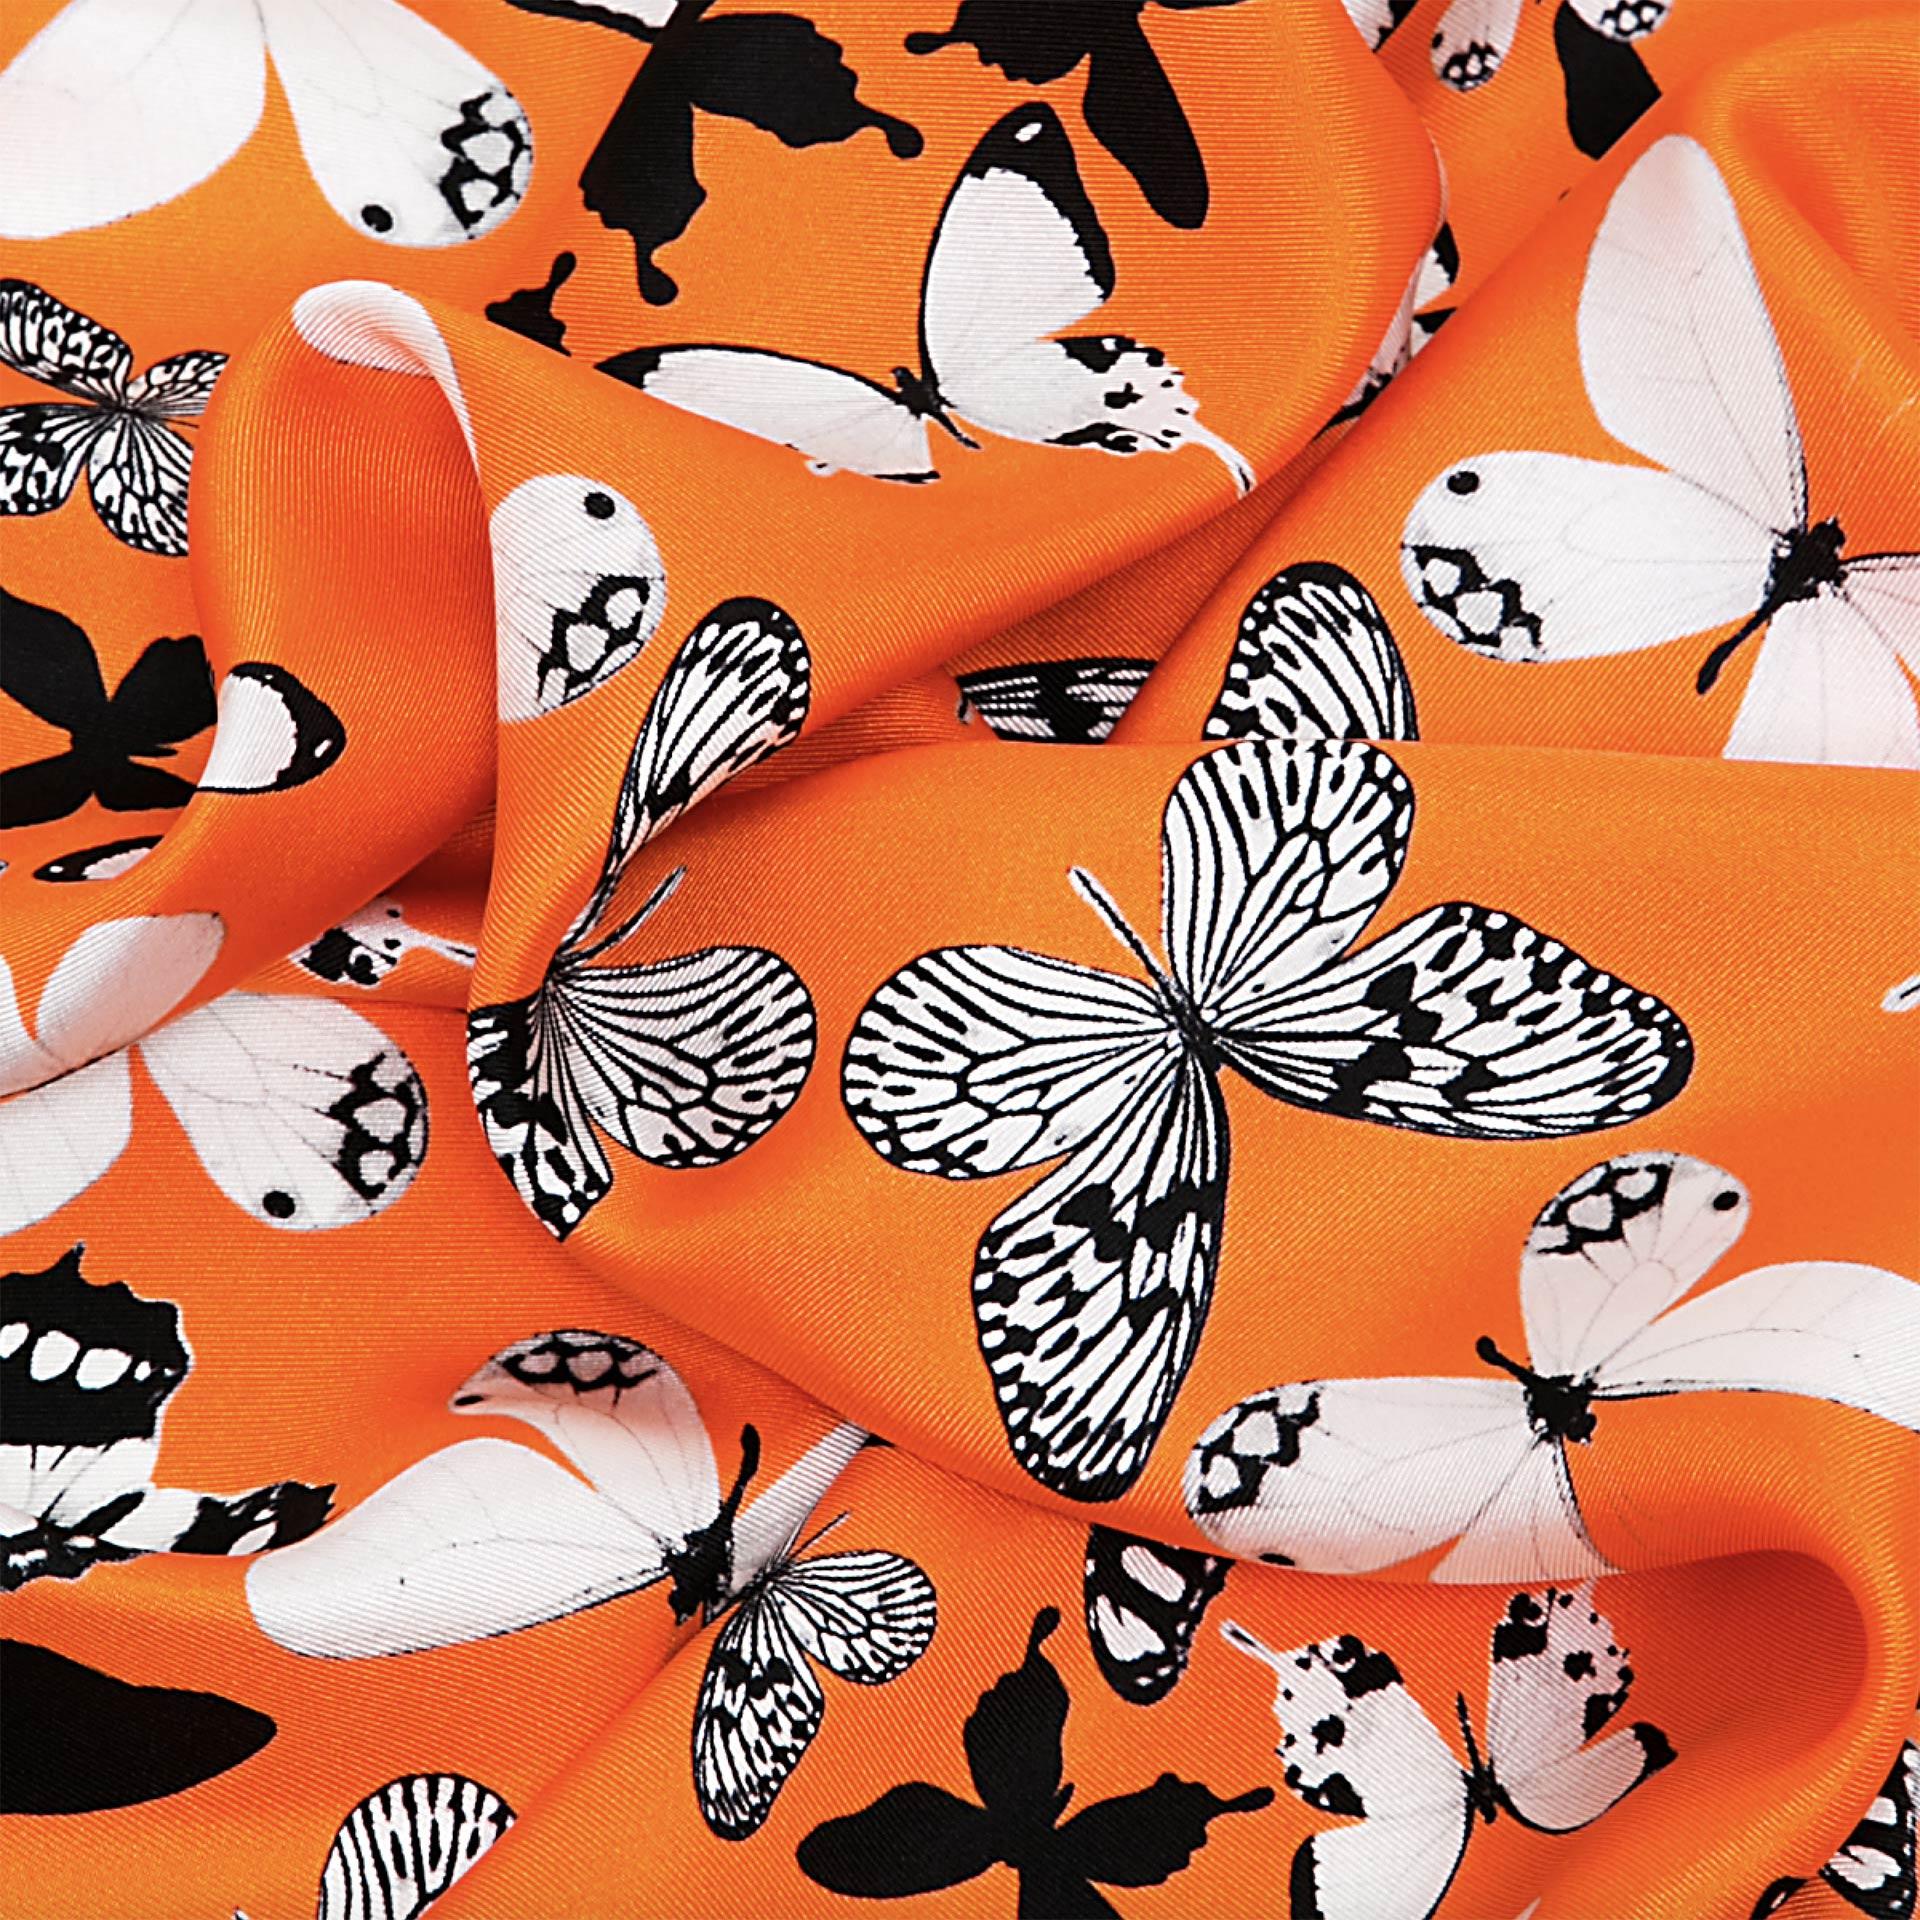 Orange Butterflies Silk Scarf - A blend of London's design and Italian craftsmanship, a luxurious gift choice.